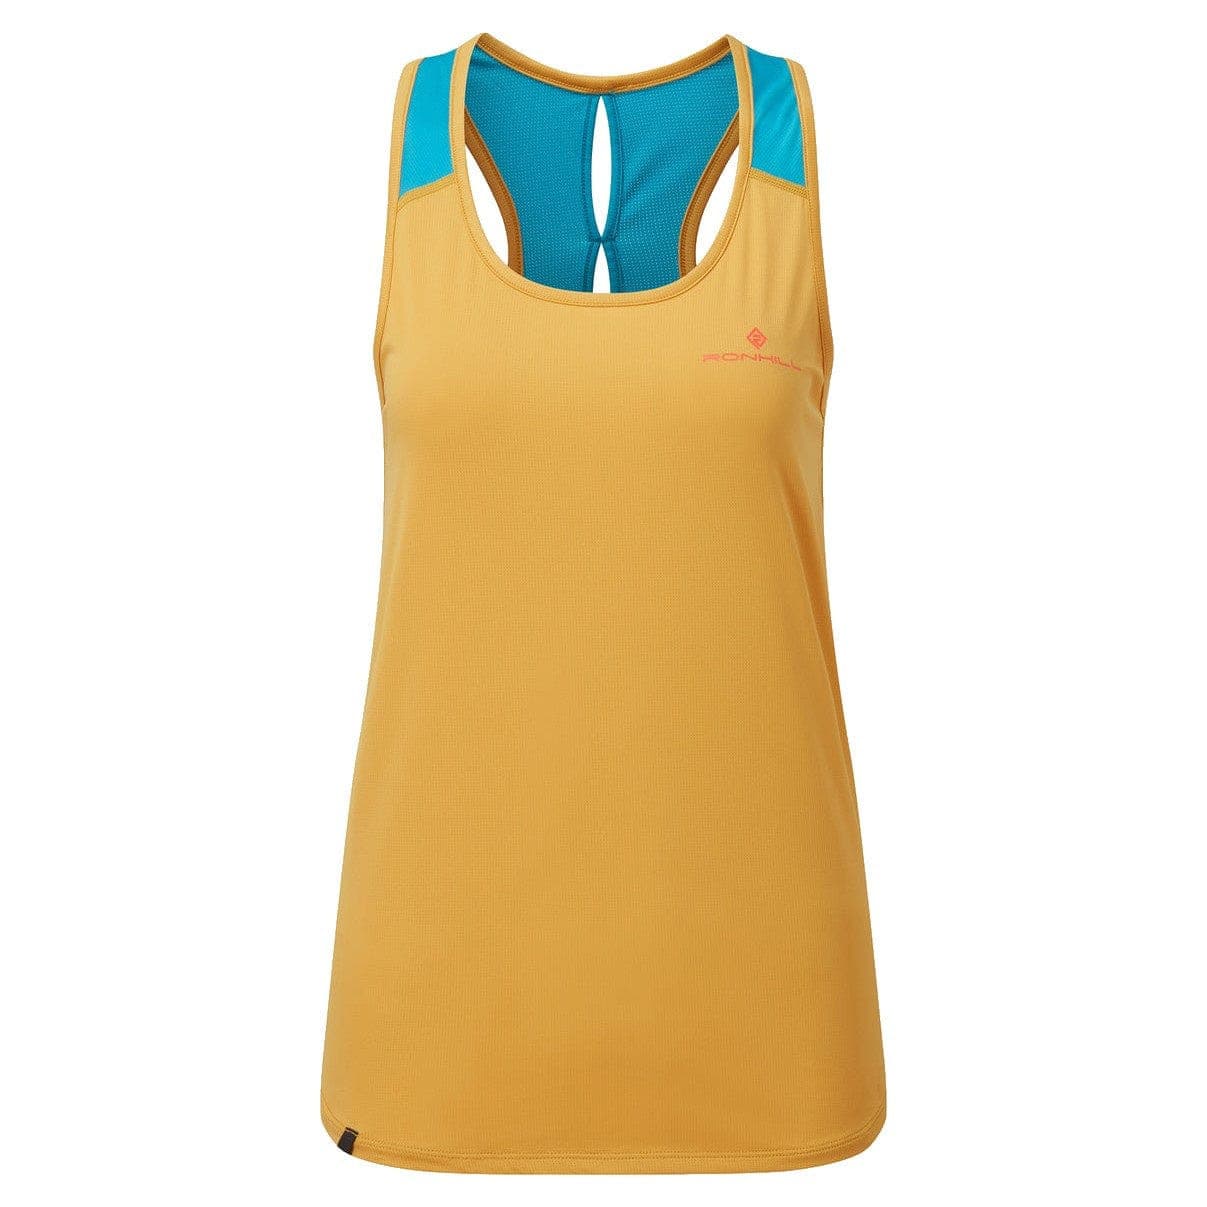 Ronhill Tech Revive Racer Vest (Womens) - Dark Gold/Azure